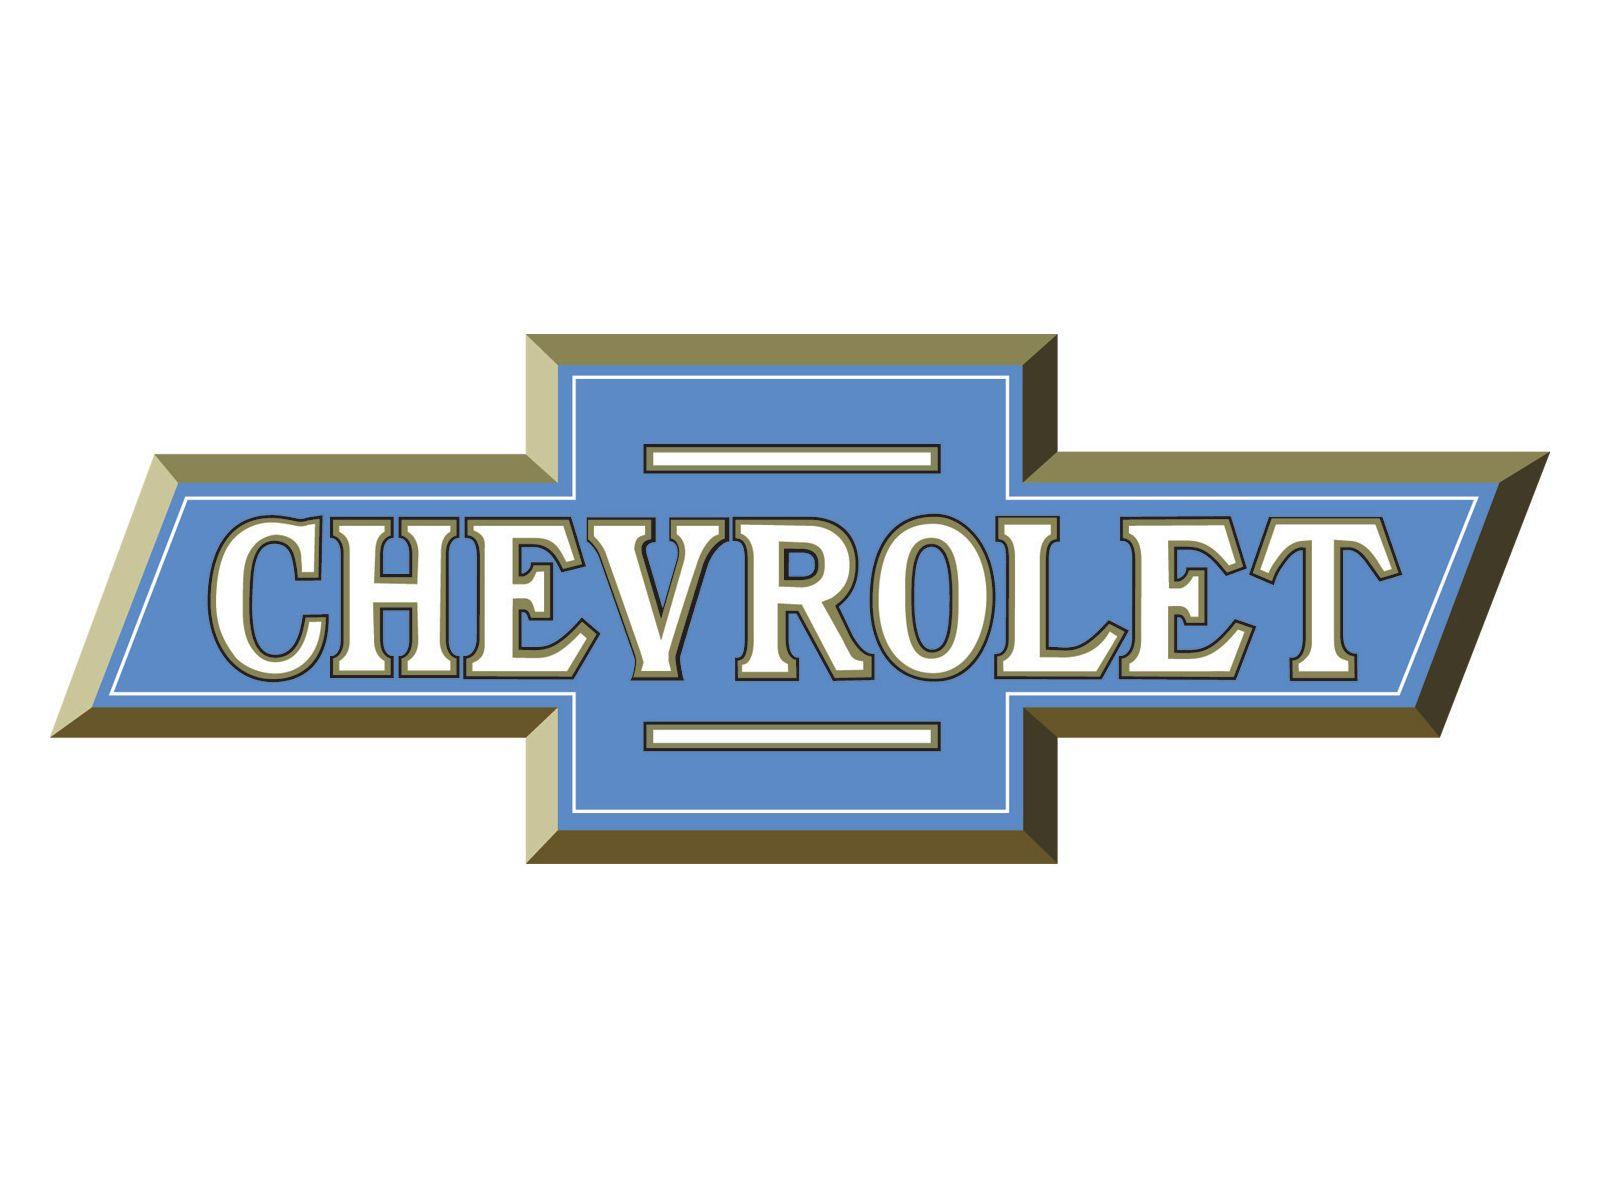 Chevrolet Logo - Chevy Logo, Chevrolet Car Symbol Meaning and History | Car Brand ...